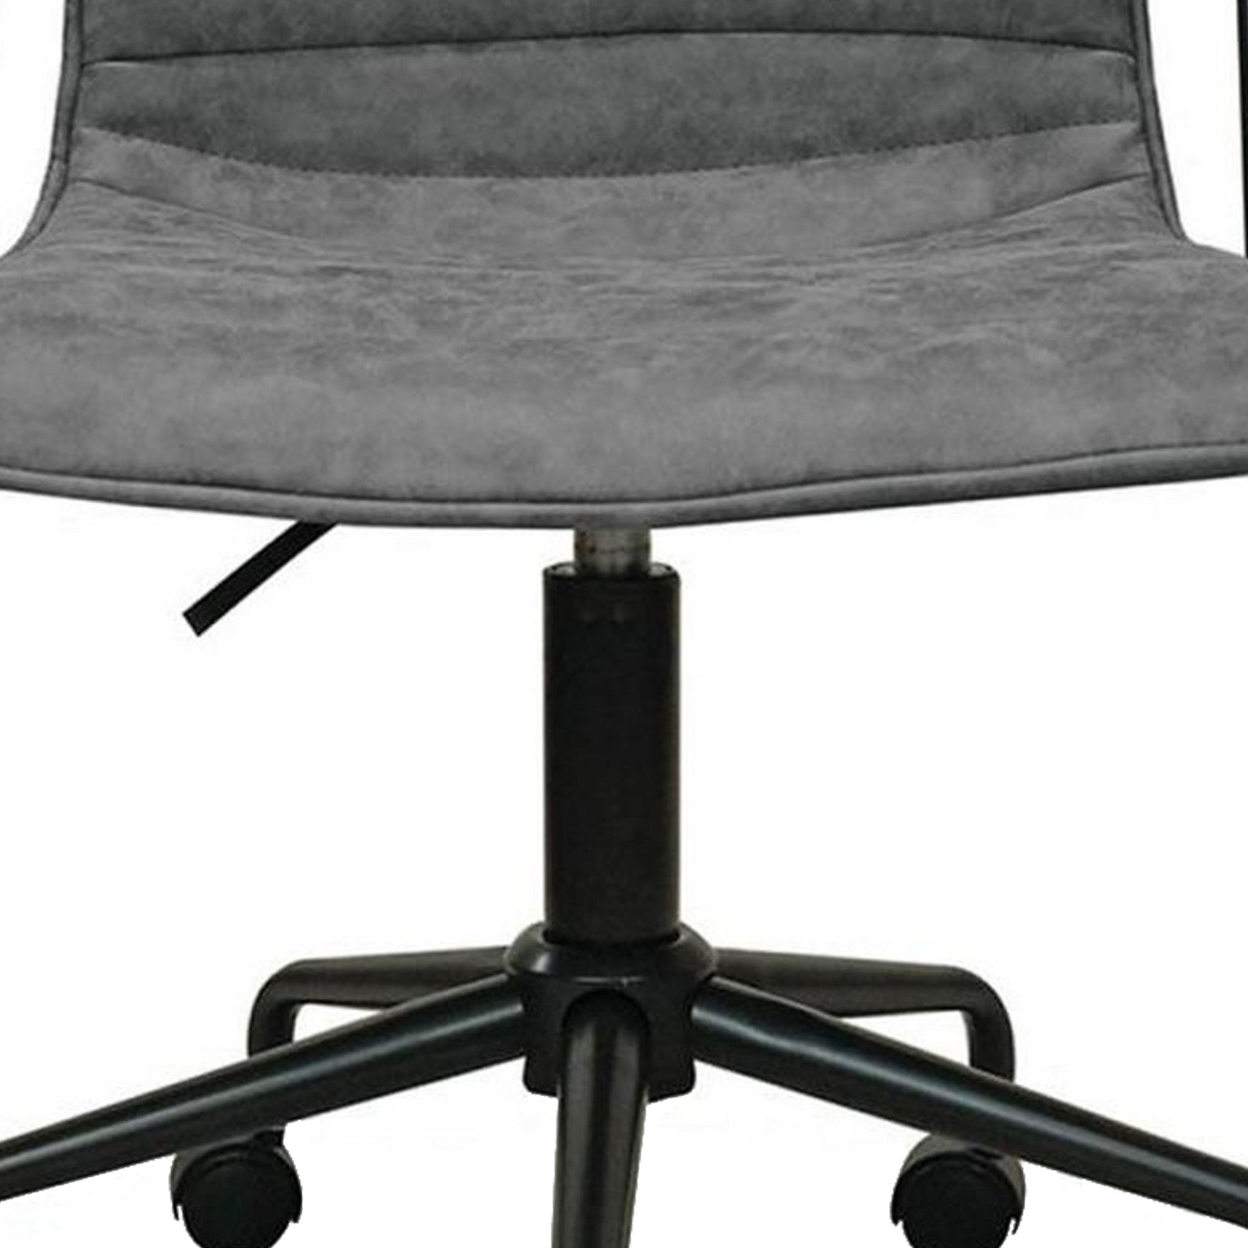 19 Inch Swivel Office Chair, Adjustable Height, Gray Microfiber Upholstery- Saltoro Sherpi